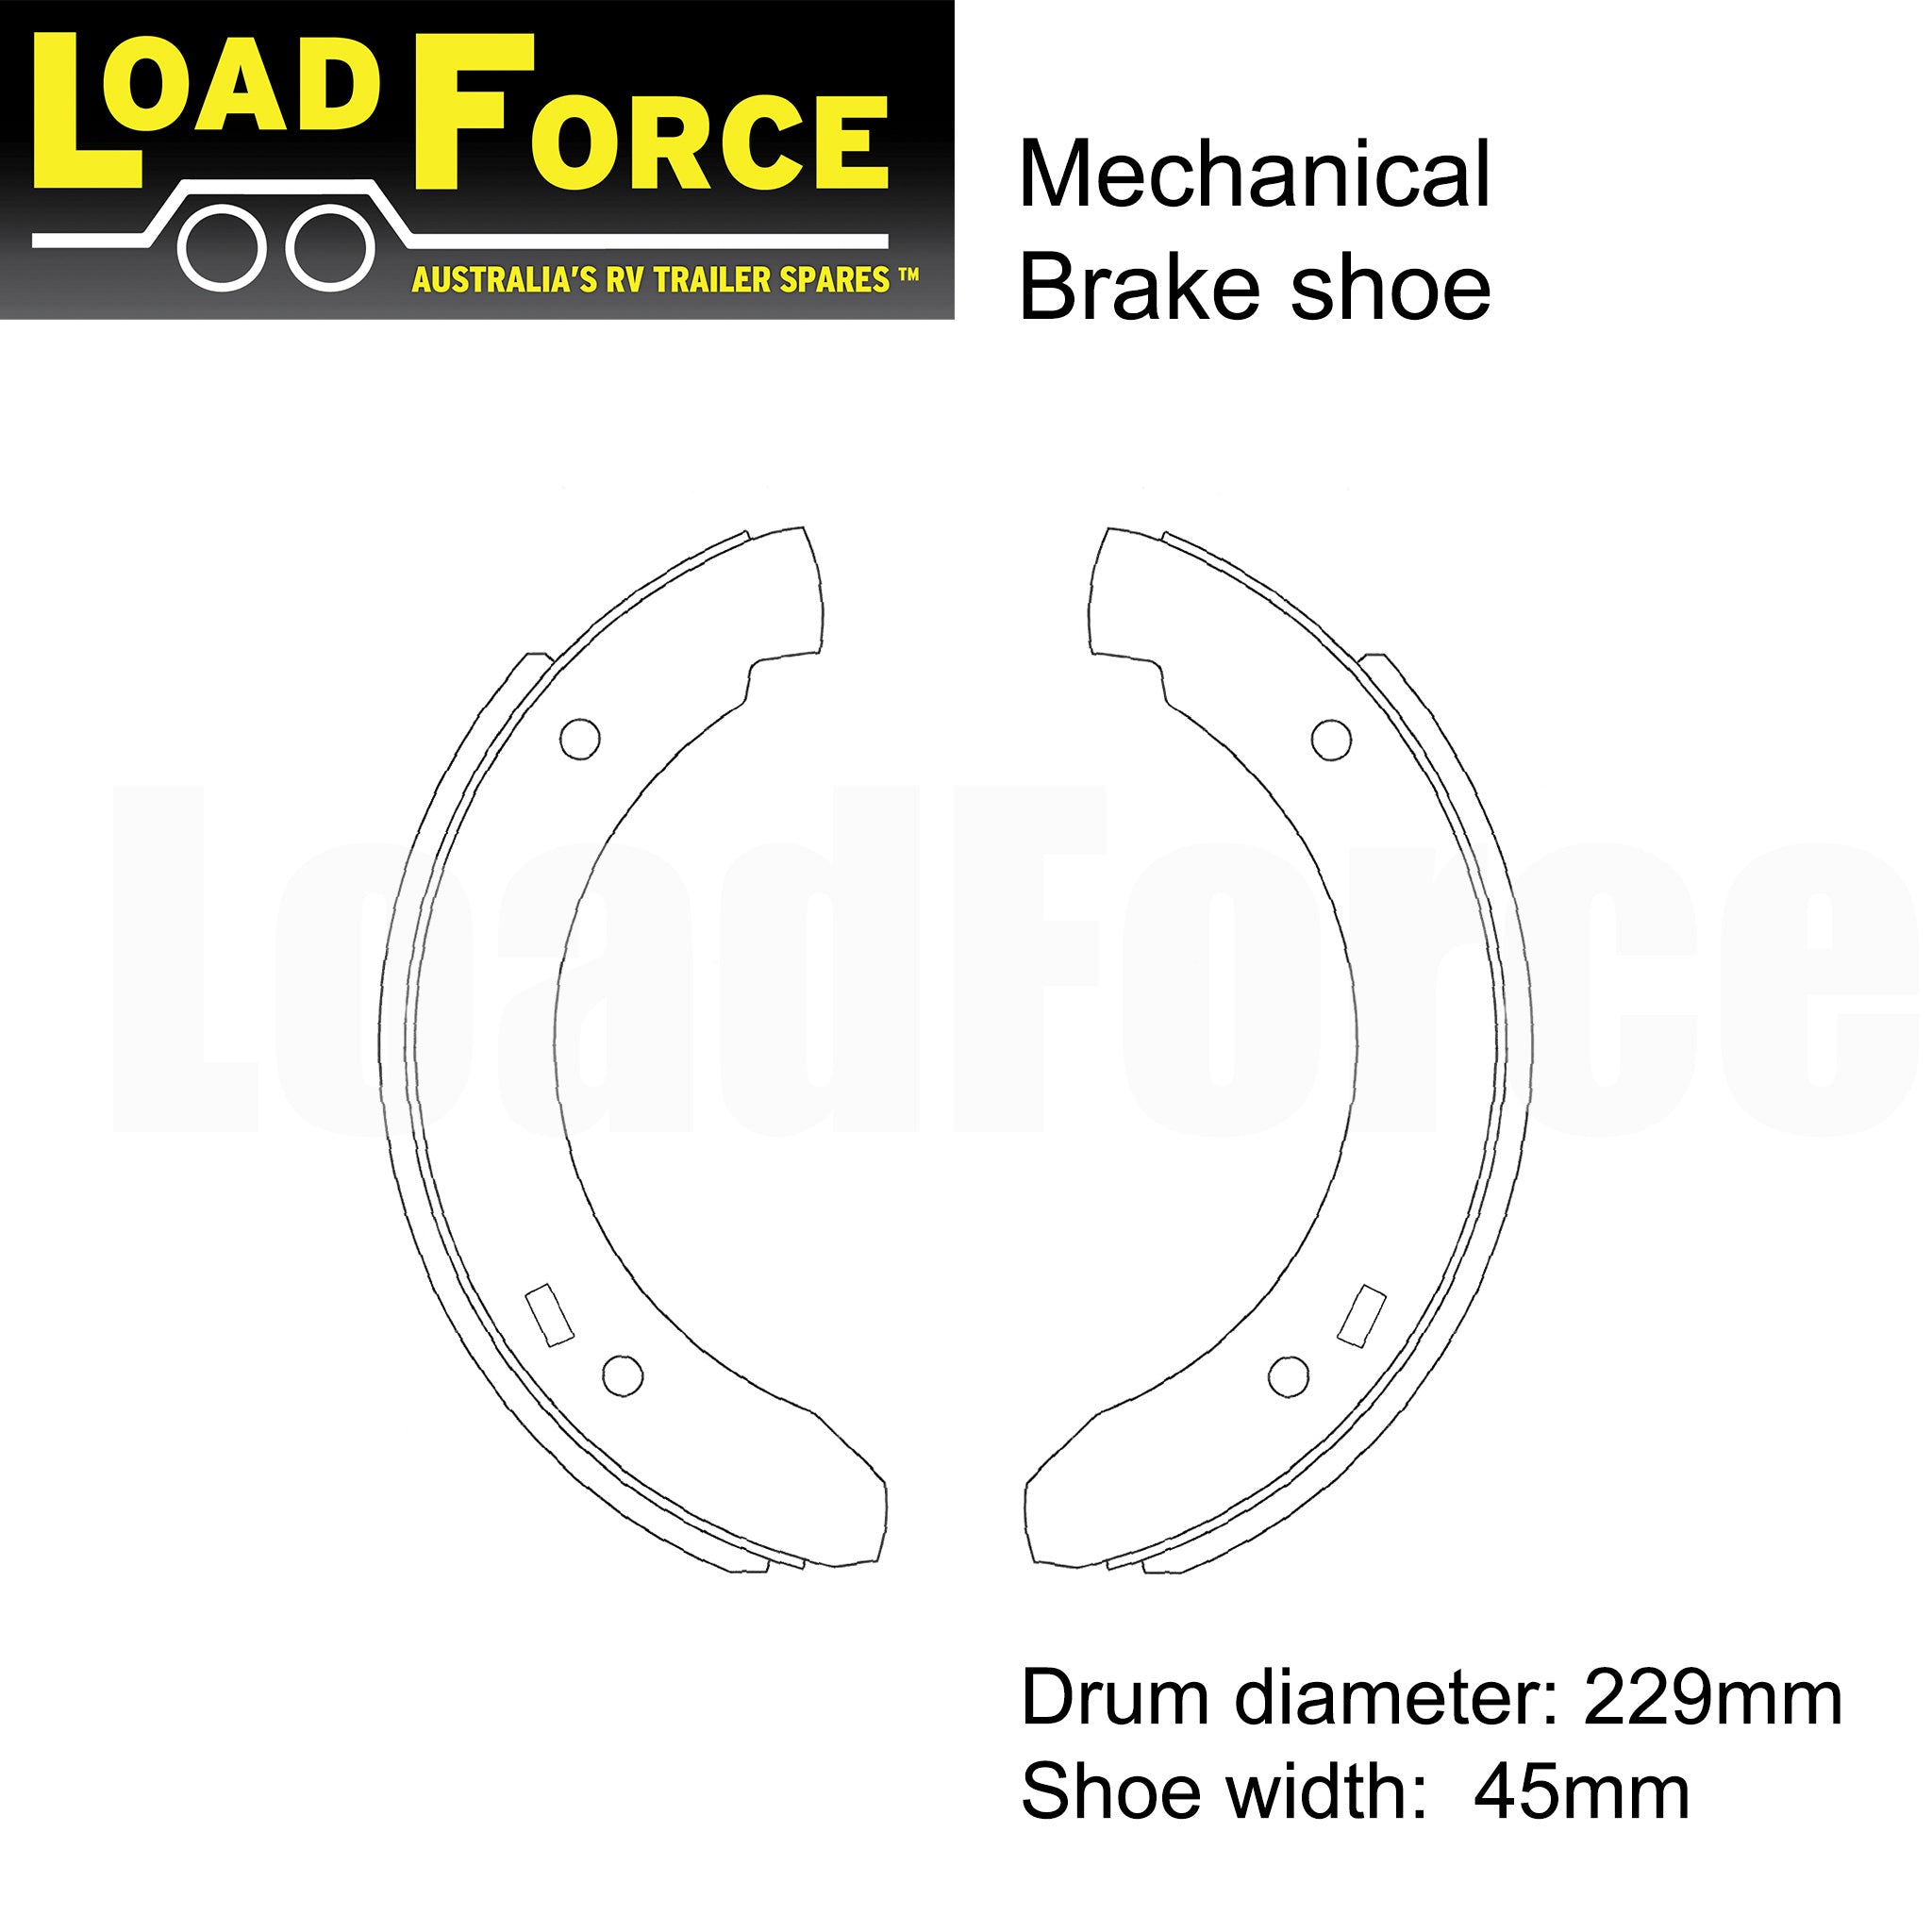 LoadForce 9 x 1.75 inch mechanical drum brake shoe set of 4